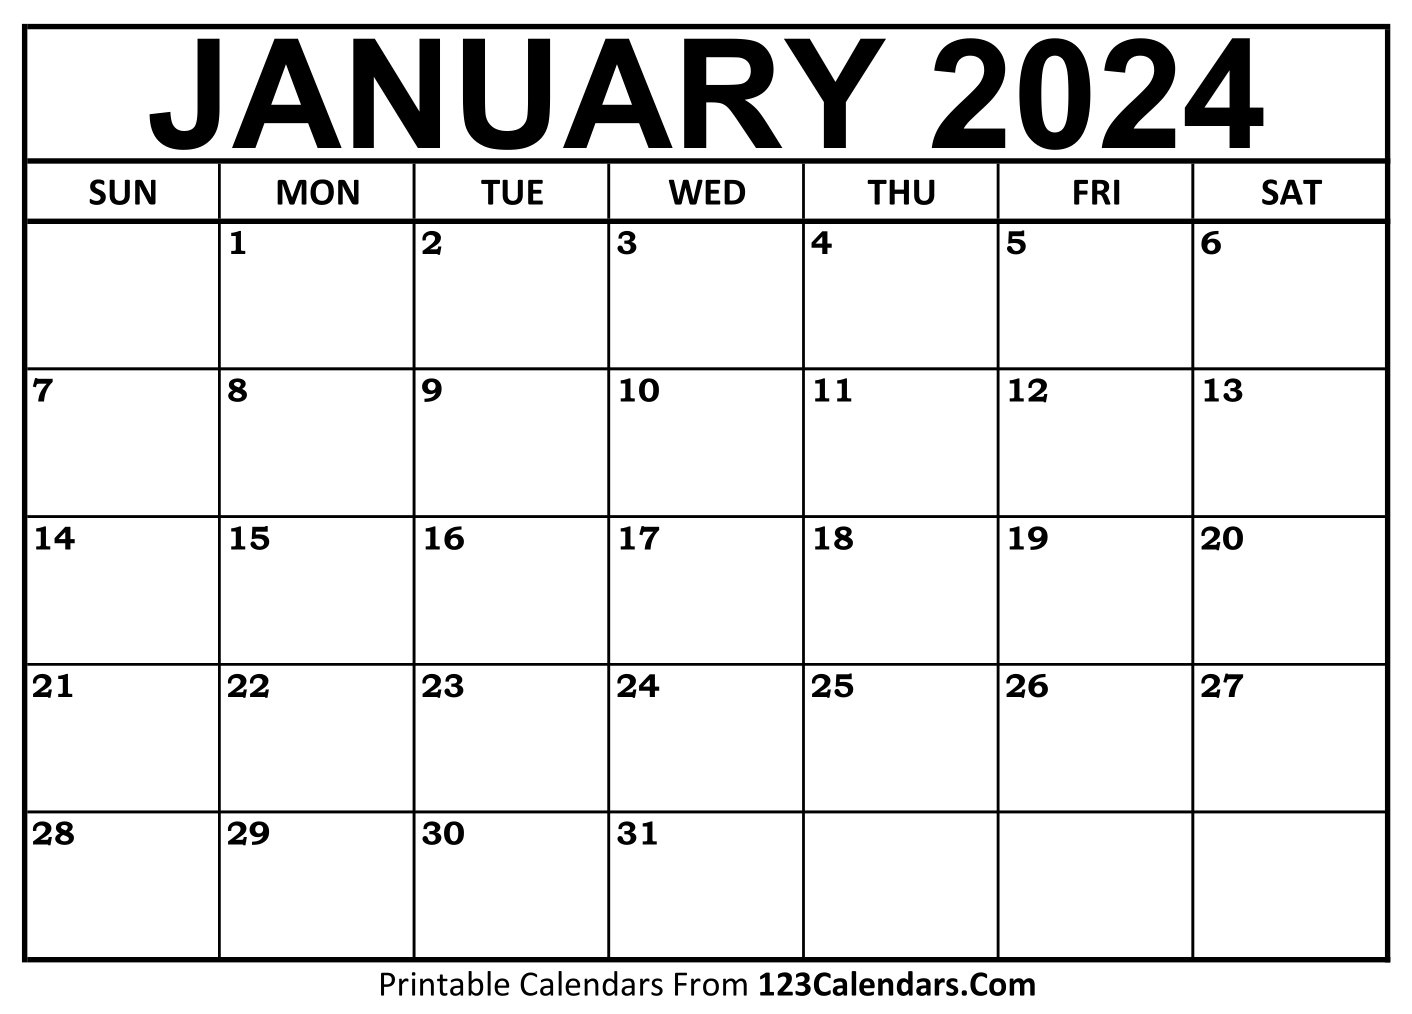 Printable January 2024 Calendar Templates - 123Calendars | Free Calendar Printable 2024